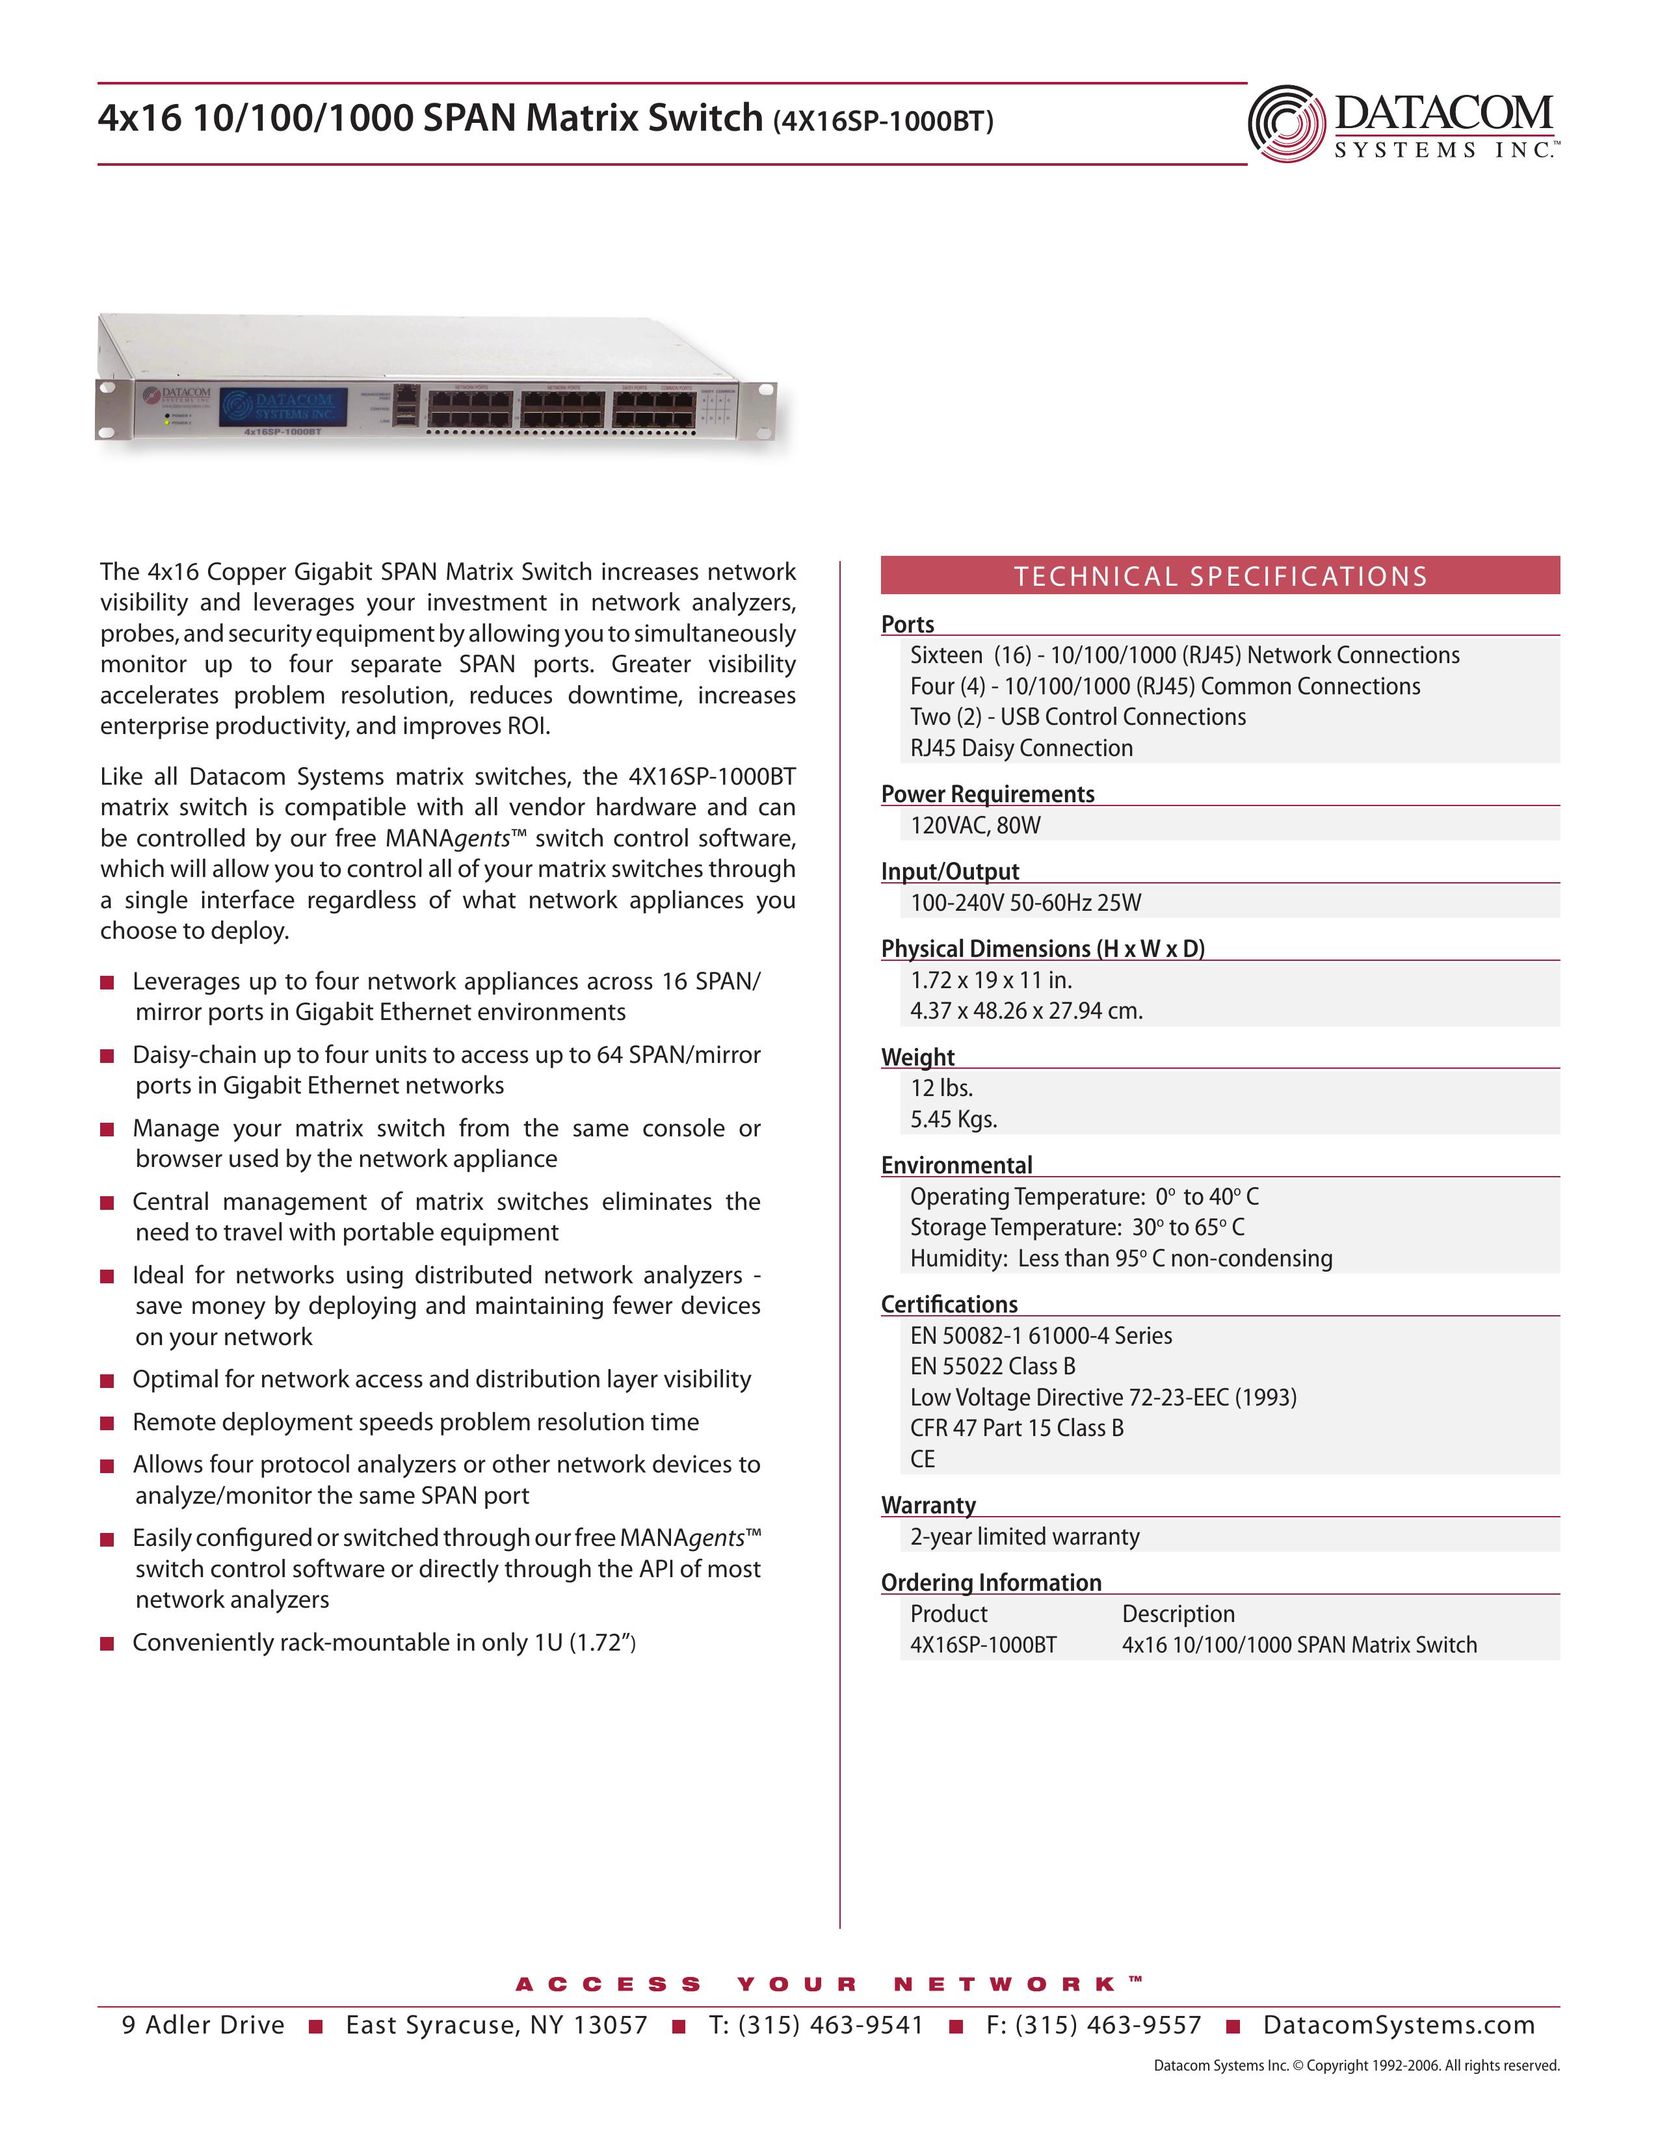 Datacom Systems 4X16SP-1000BT Switch User Manual